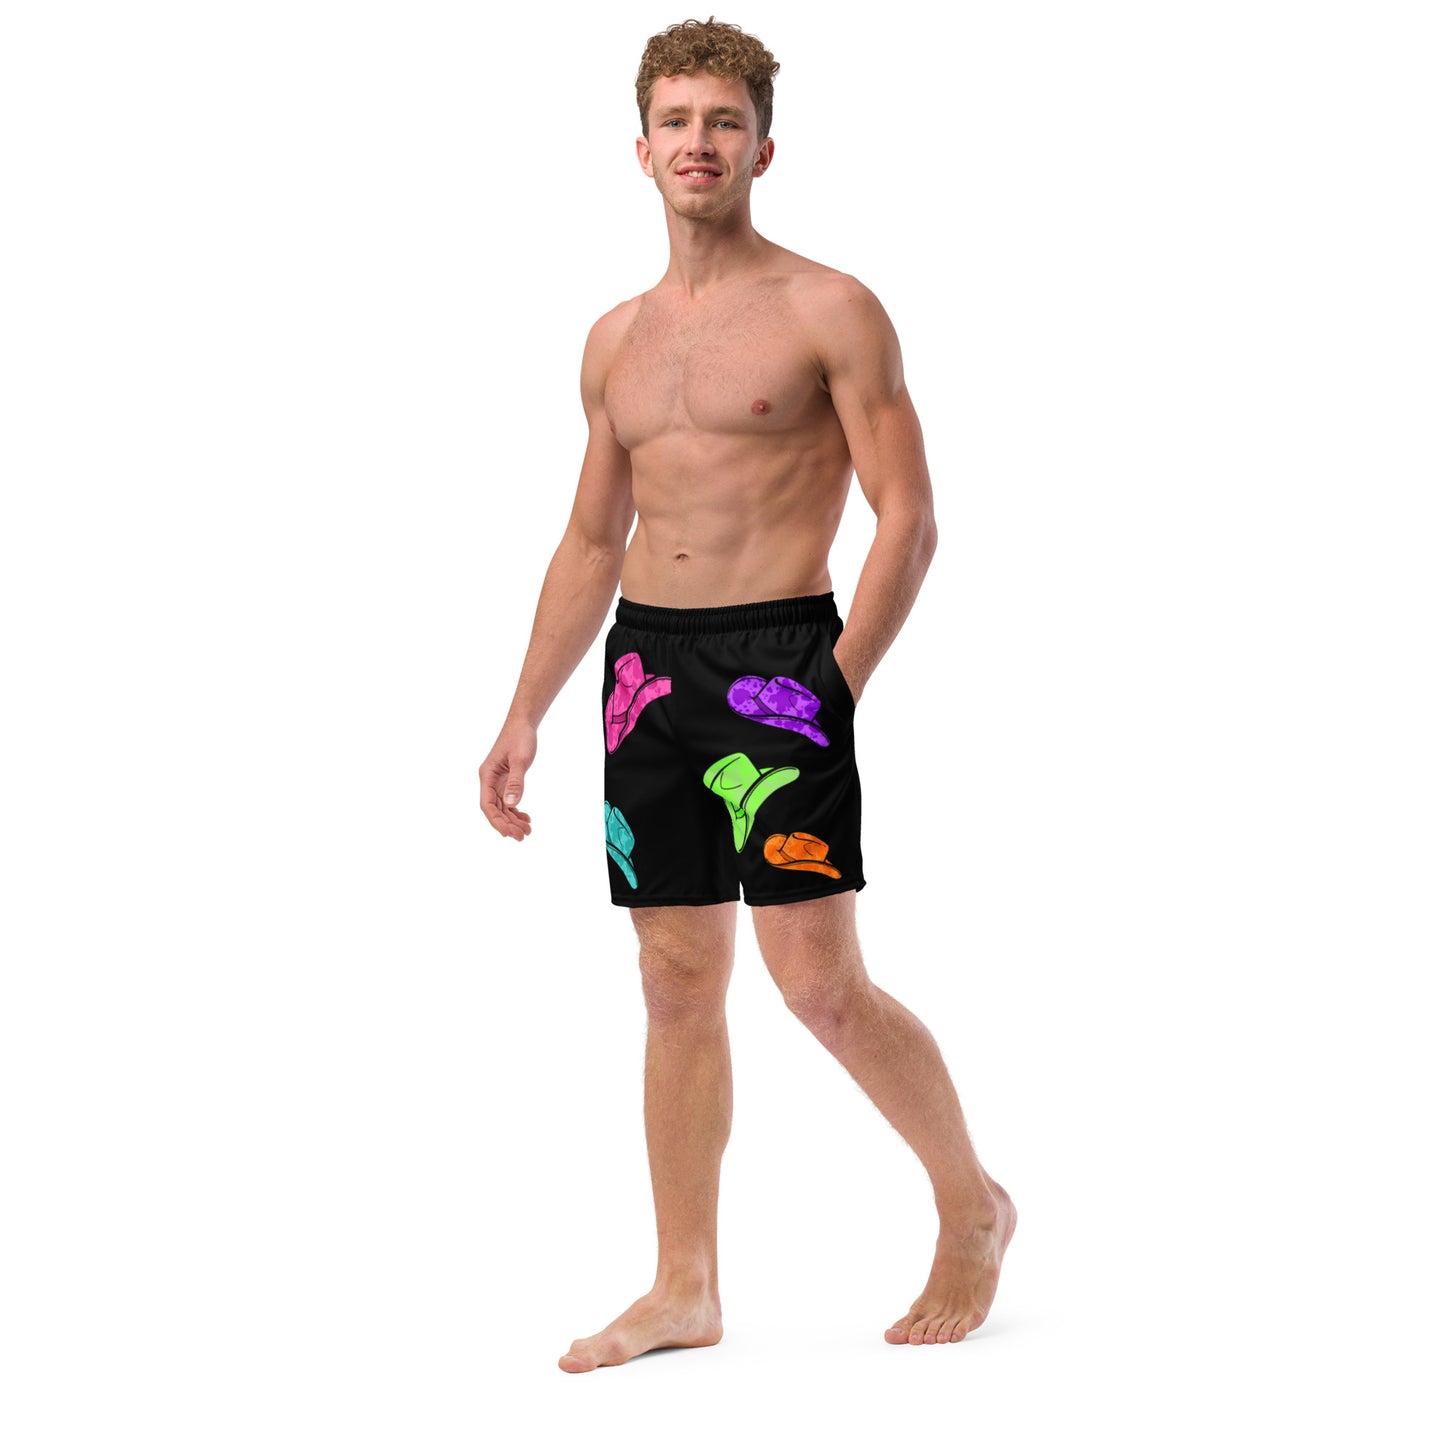 Yeehaw All Neon Men's Swim Trunks